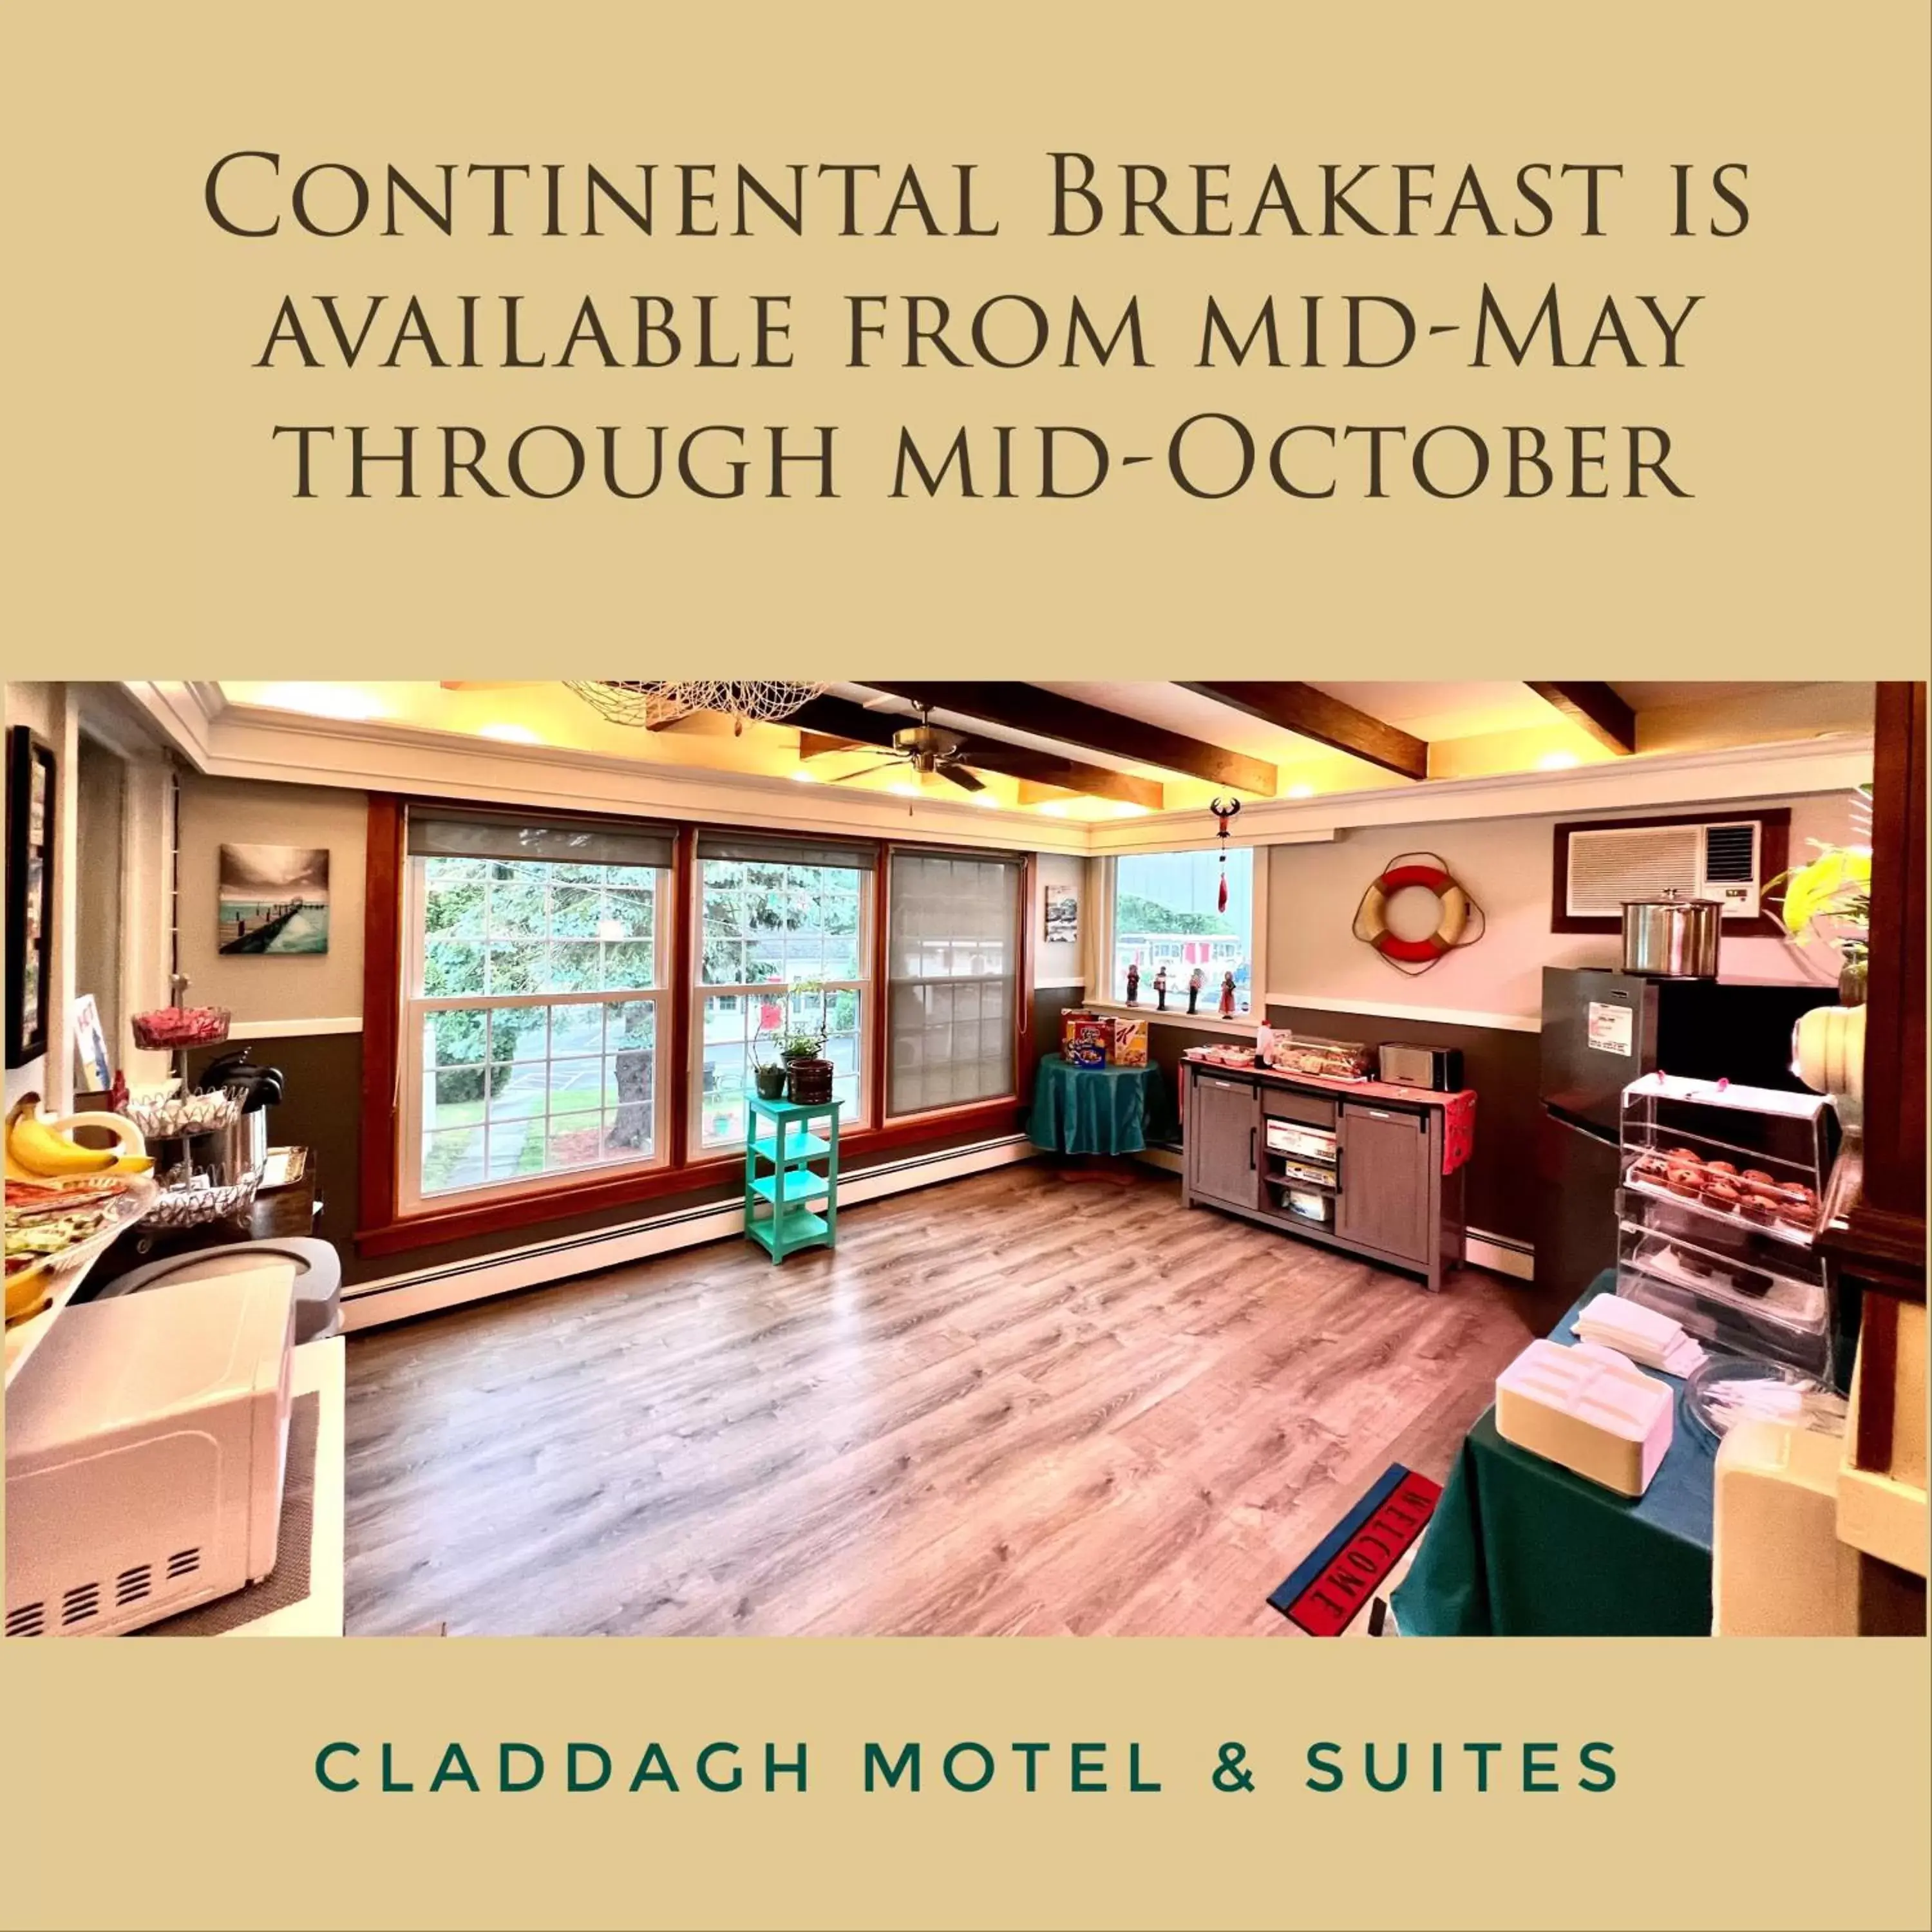 Breakfast in Claddagh Motel & Suites